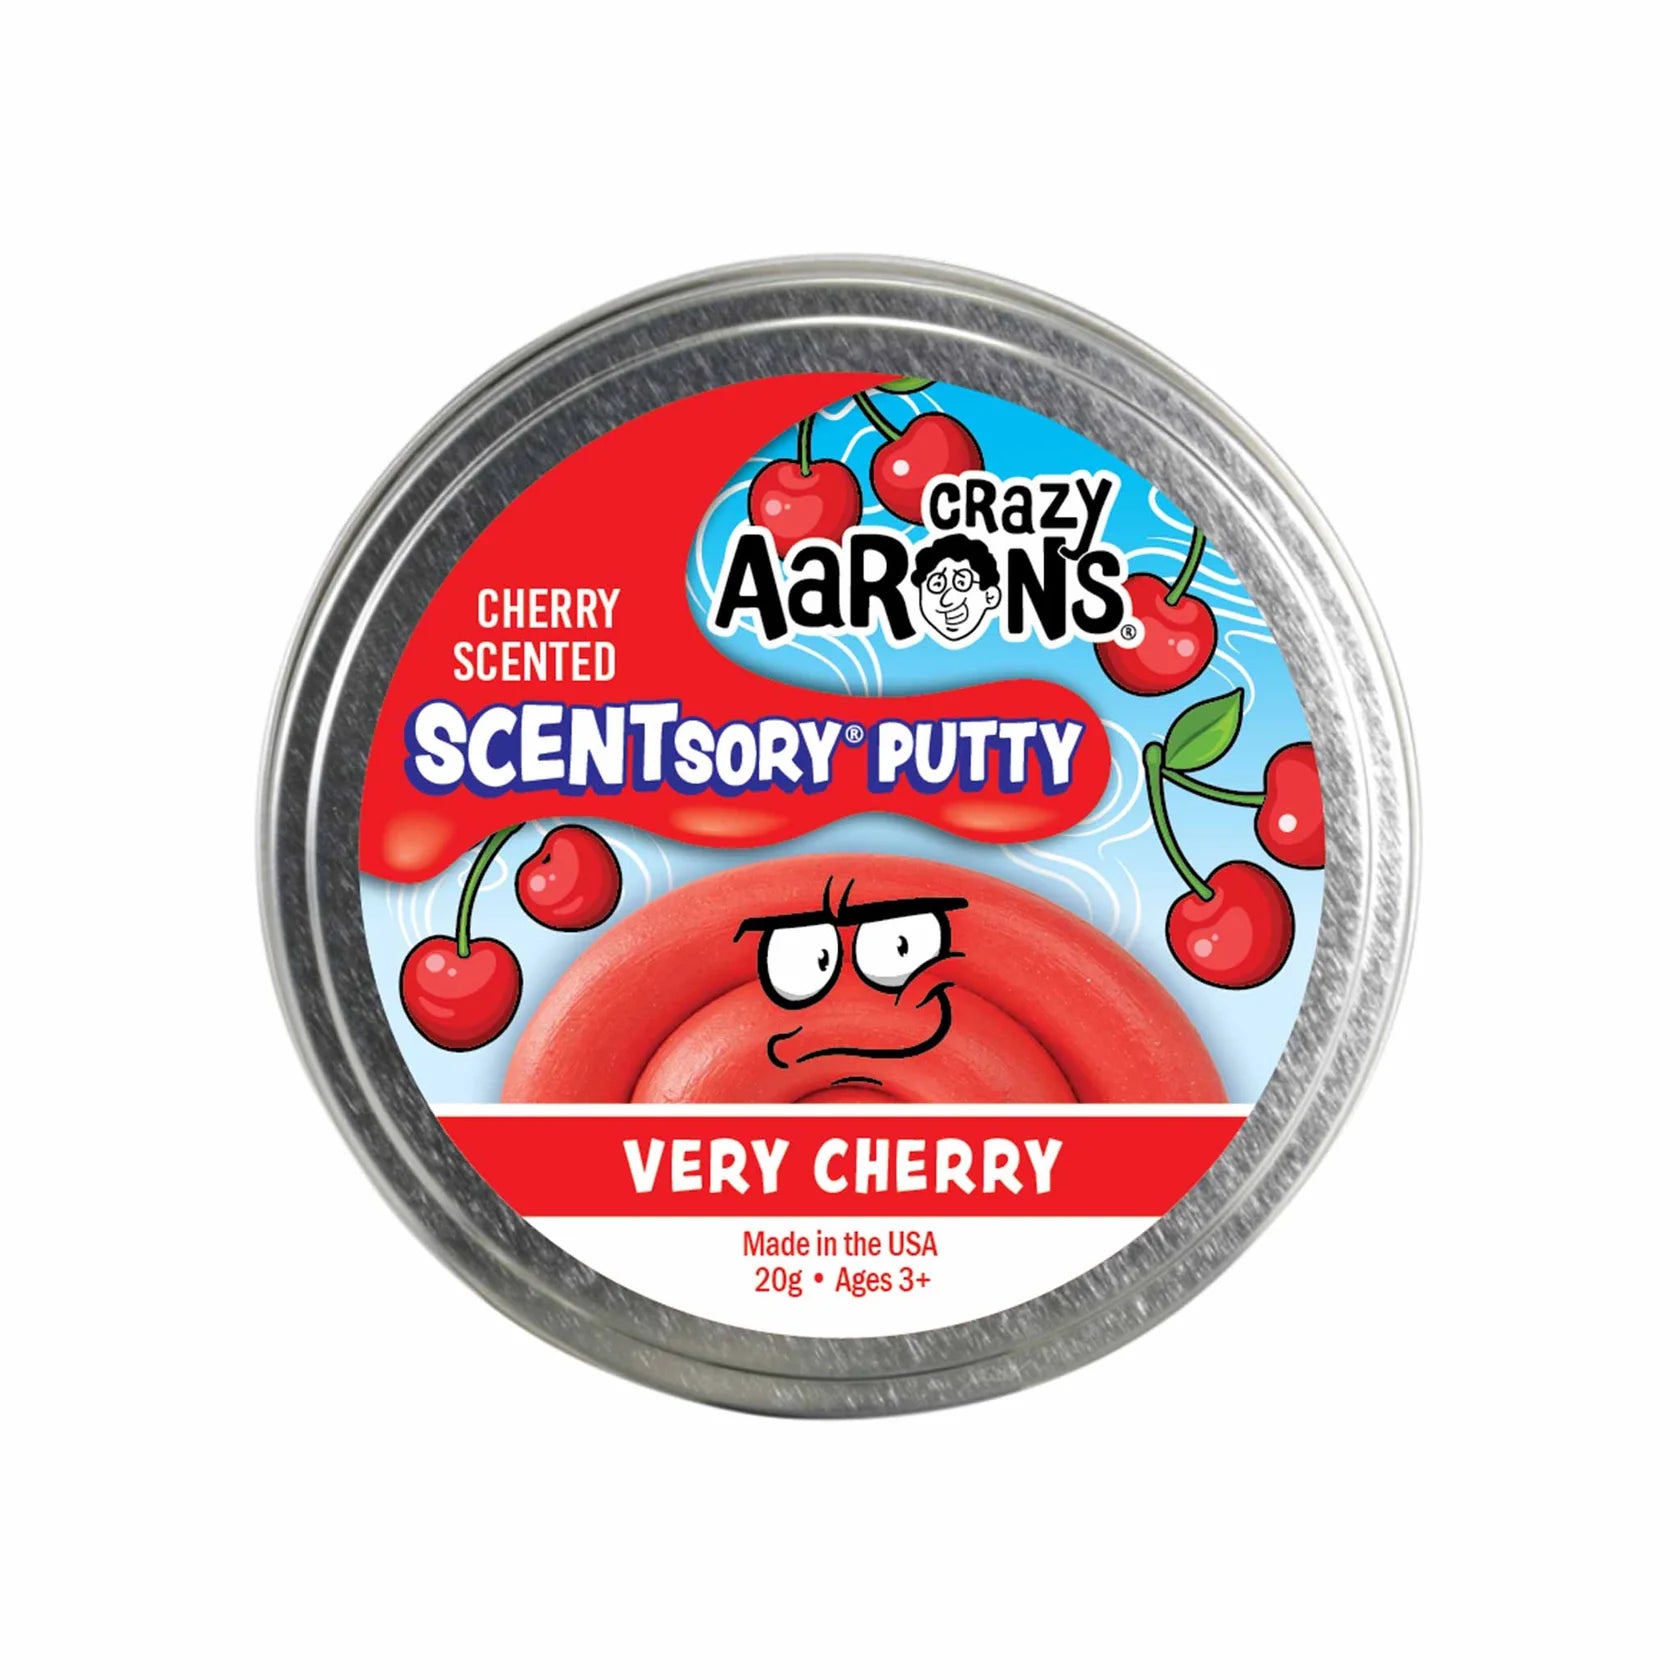 Crazy Aaron's Scentsory Putty - Very Cherry